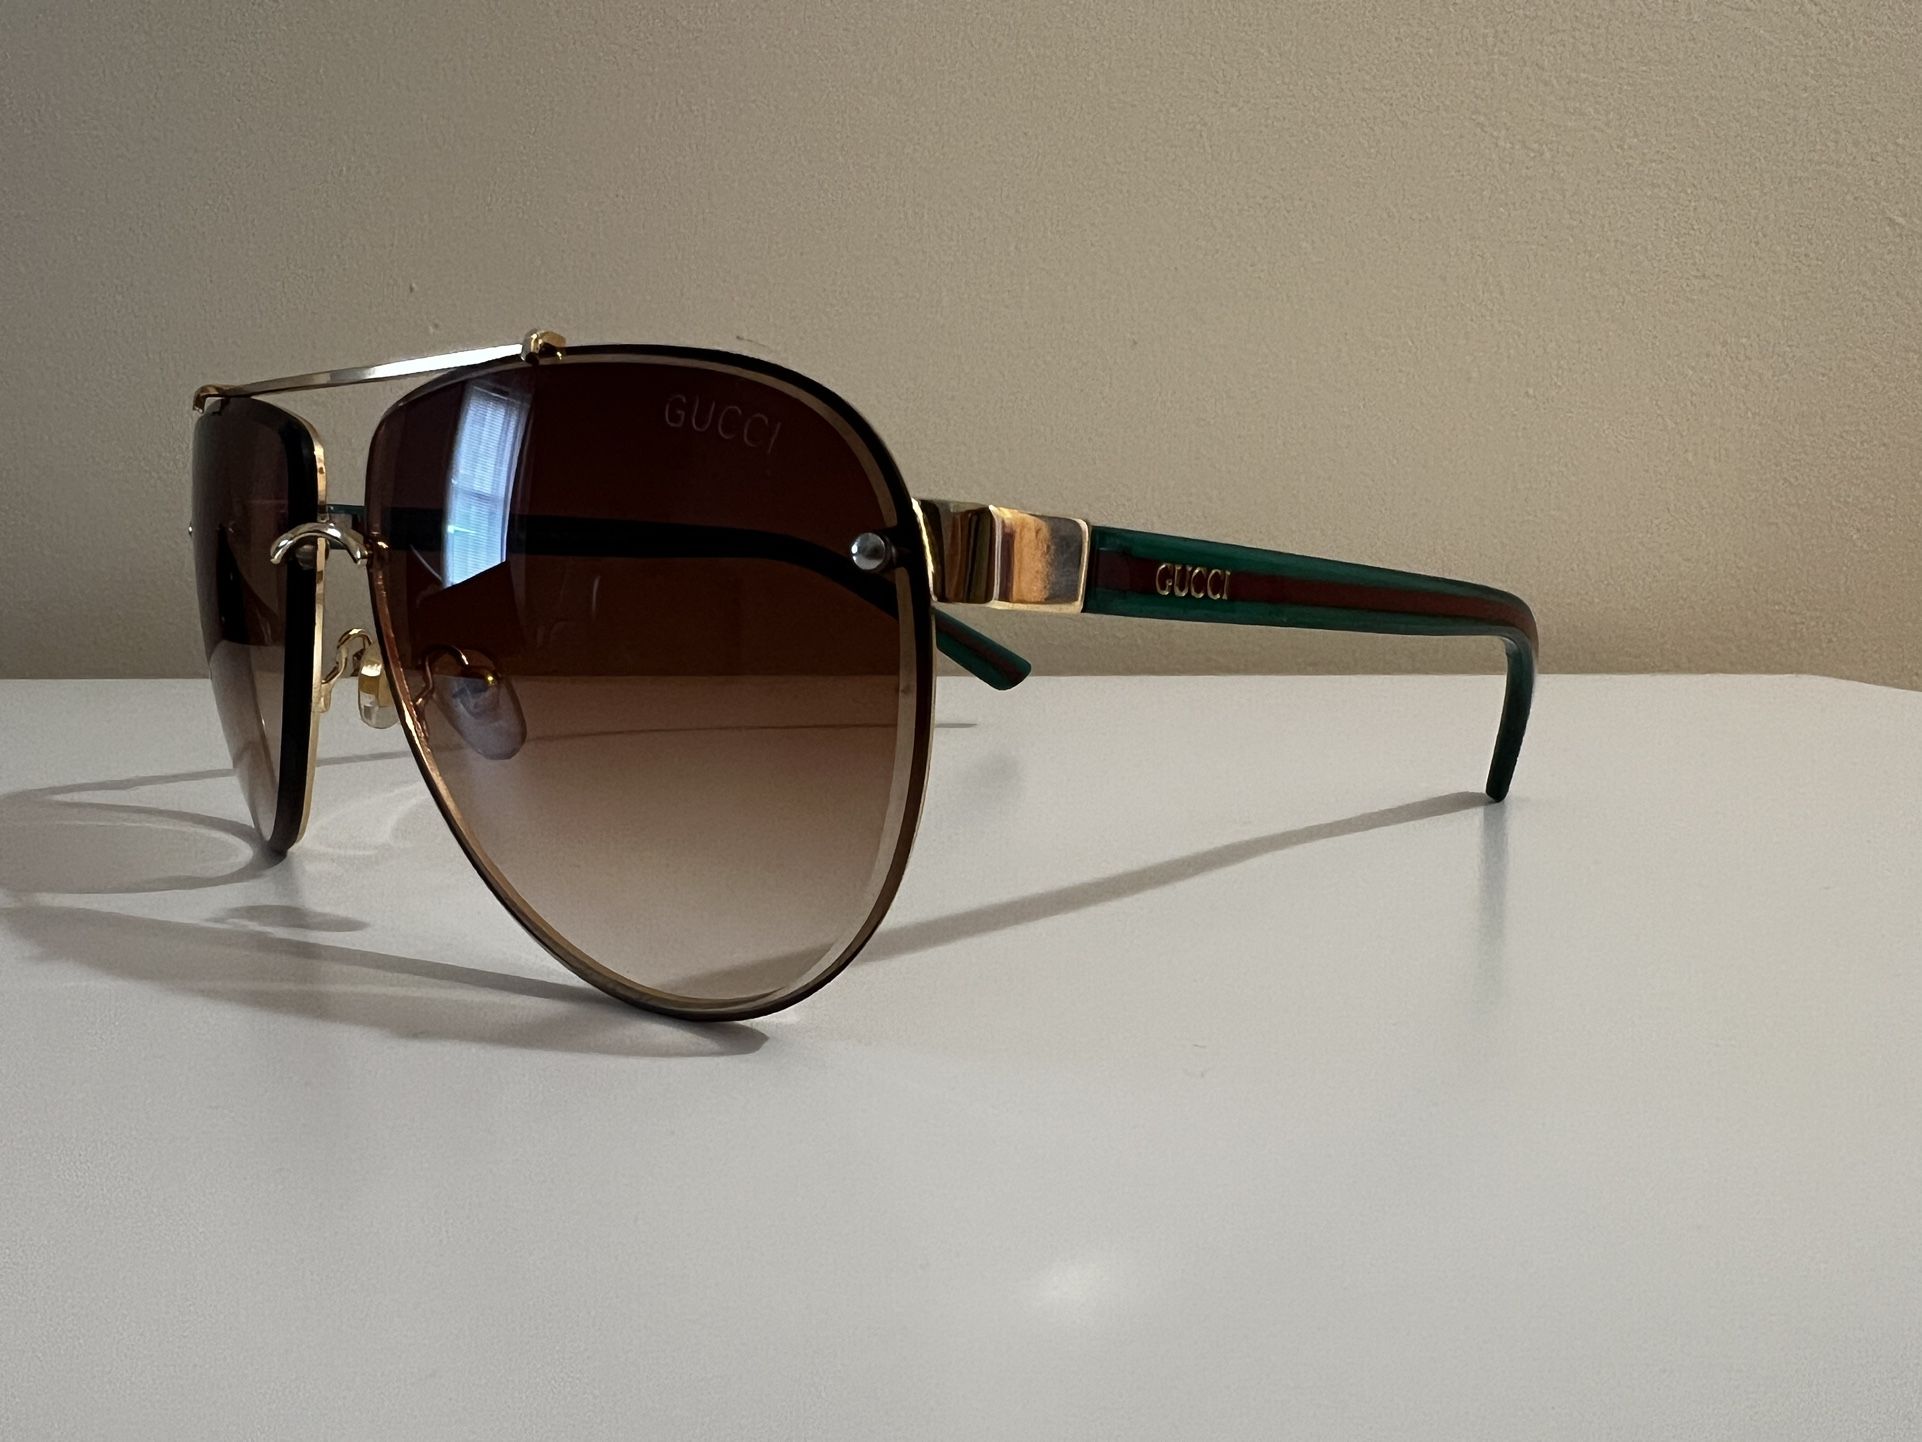 Sunglasses ❤️‍🔥